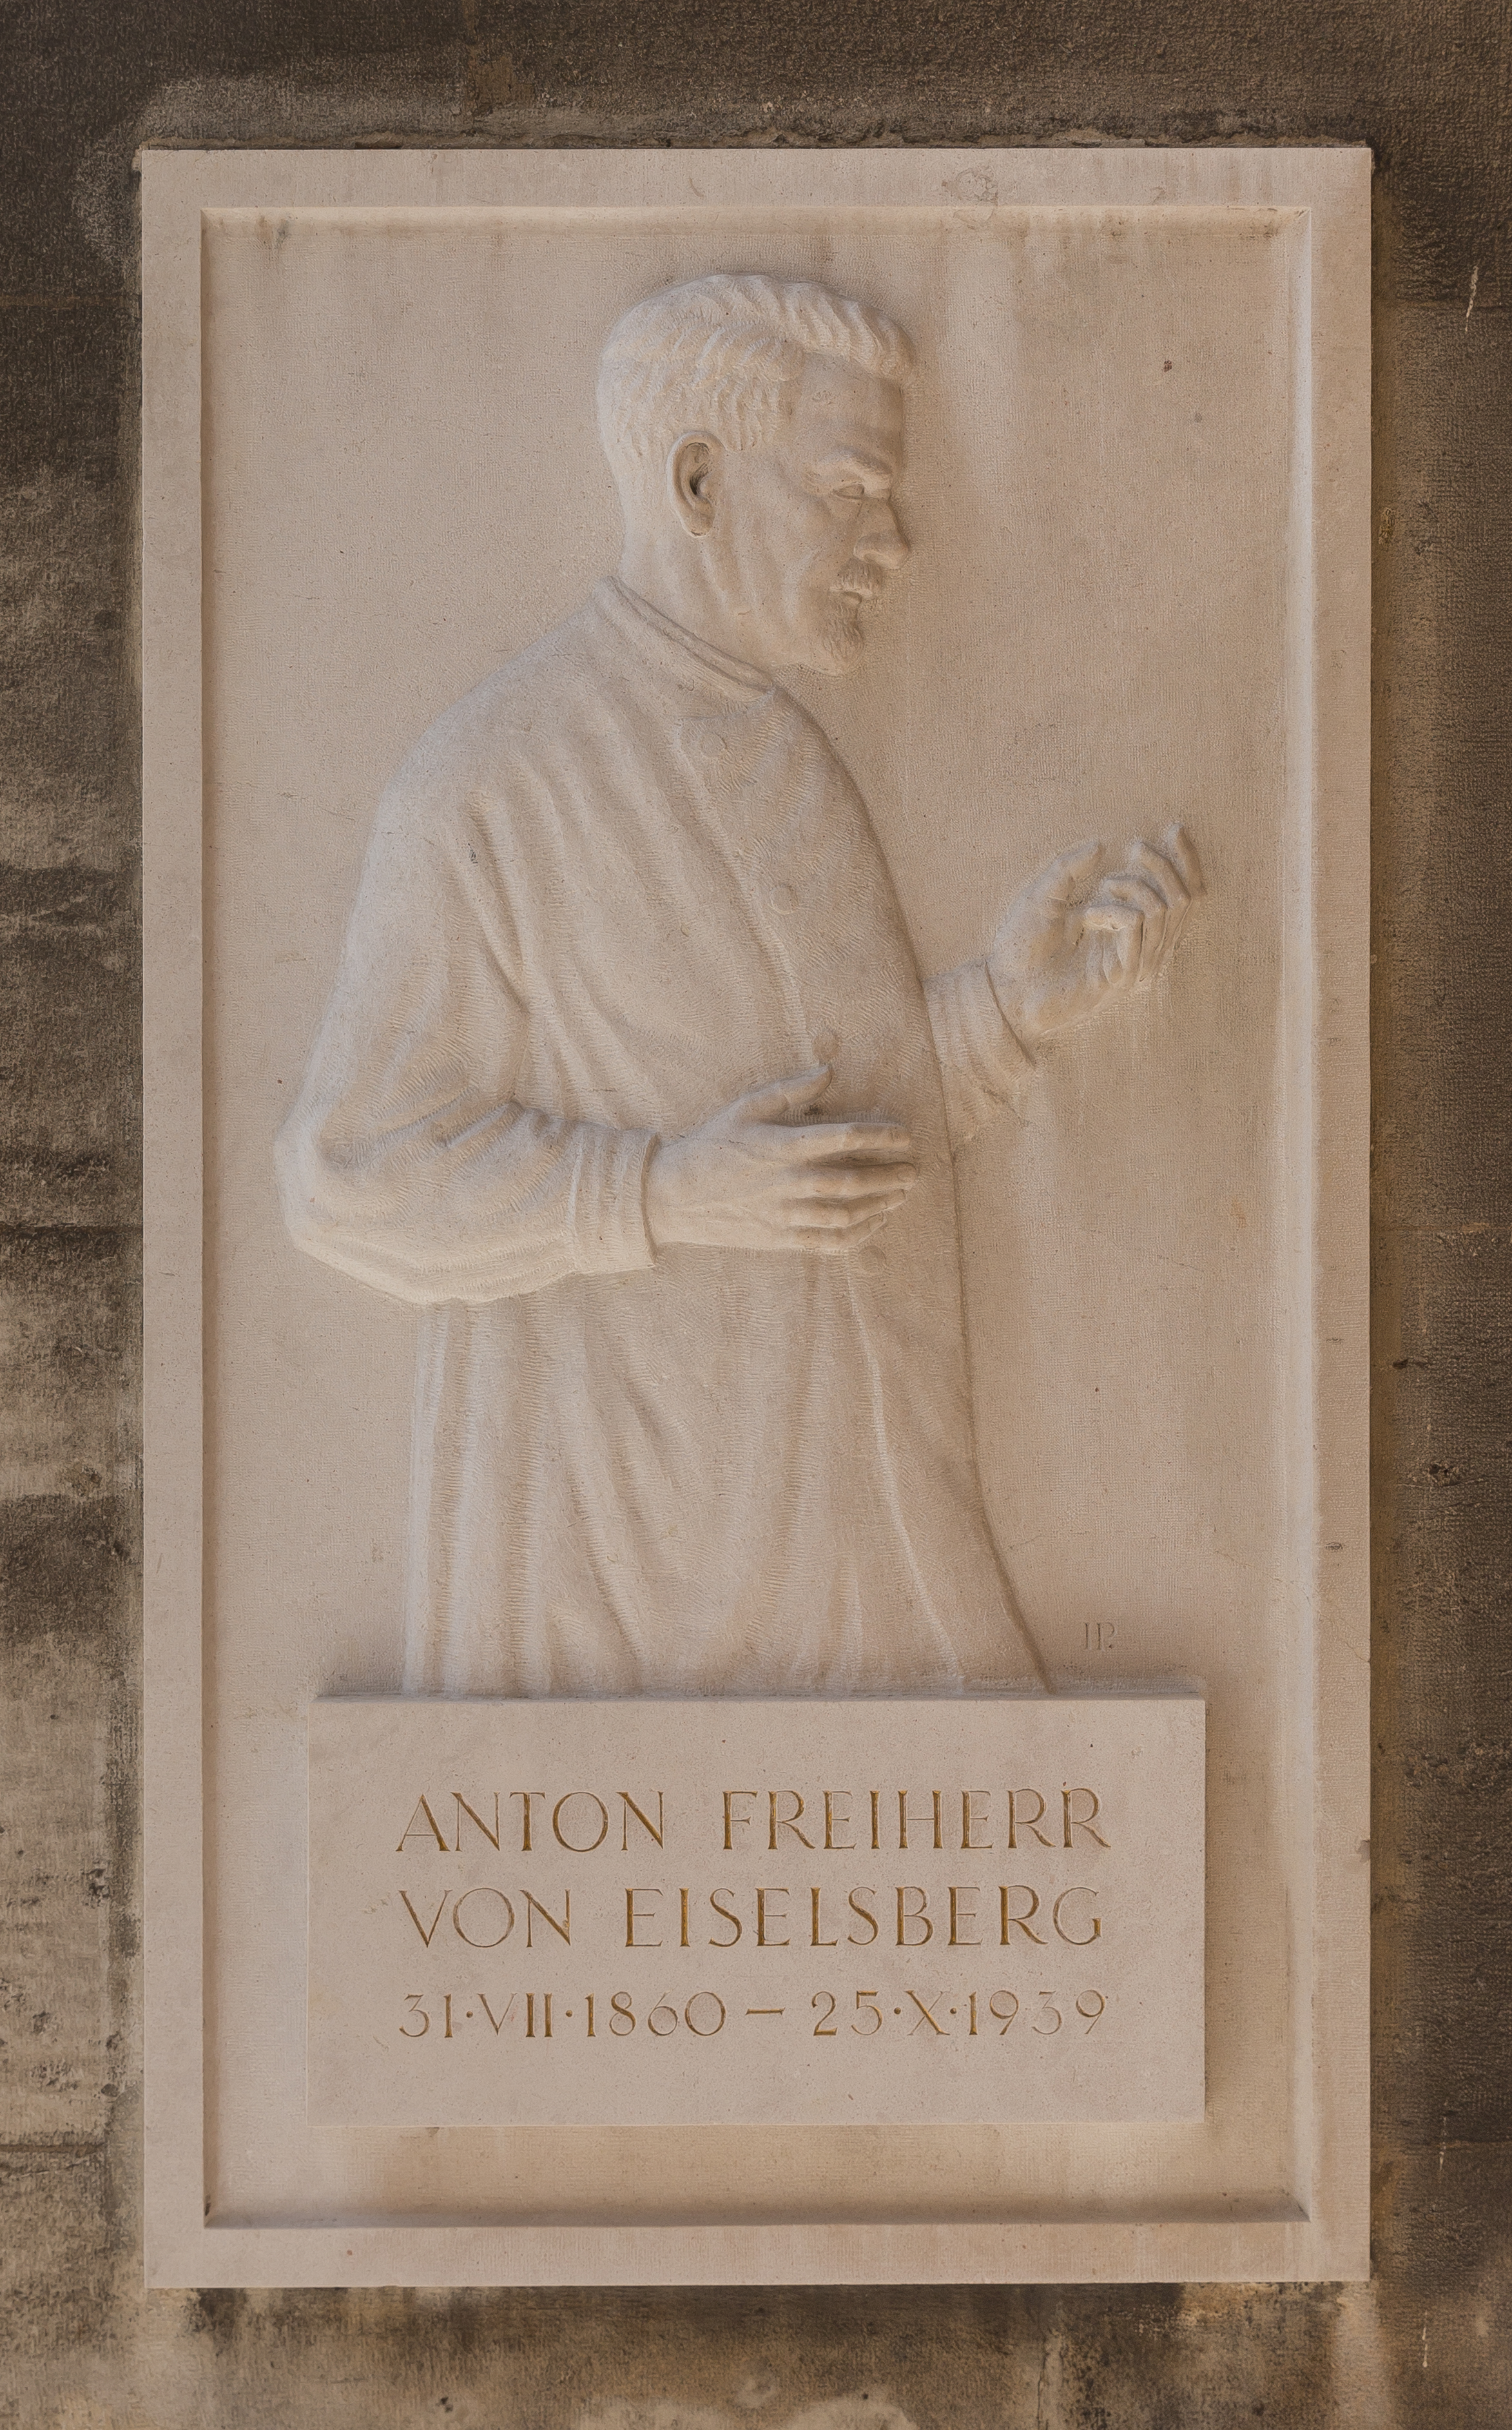 Anton von Eiselsberg (1860-1939), physician, Nr. 132, basrelief (marble) in the Arkadenhof of the University of Vienn-3528